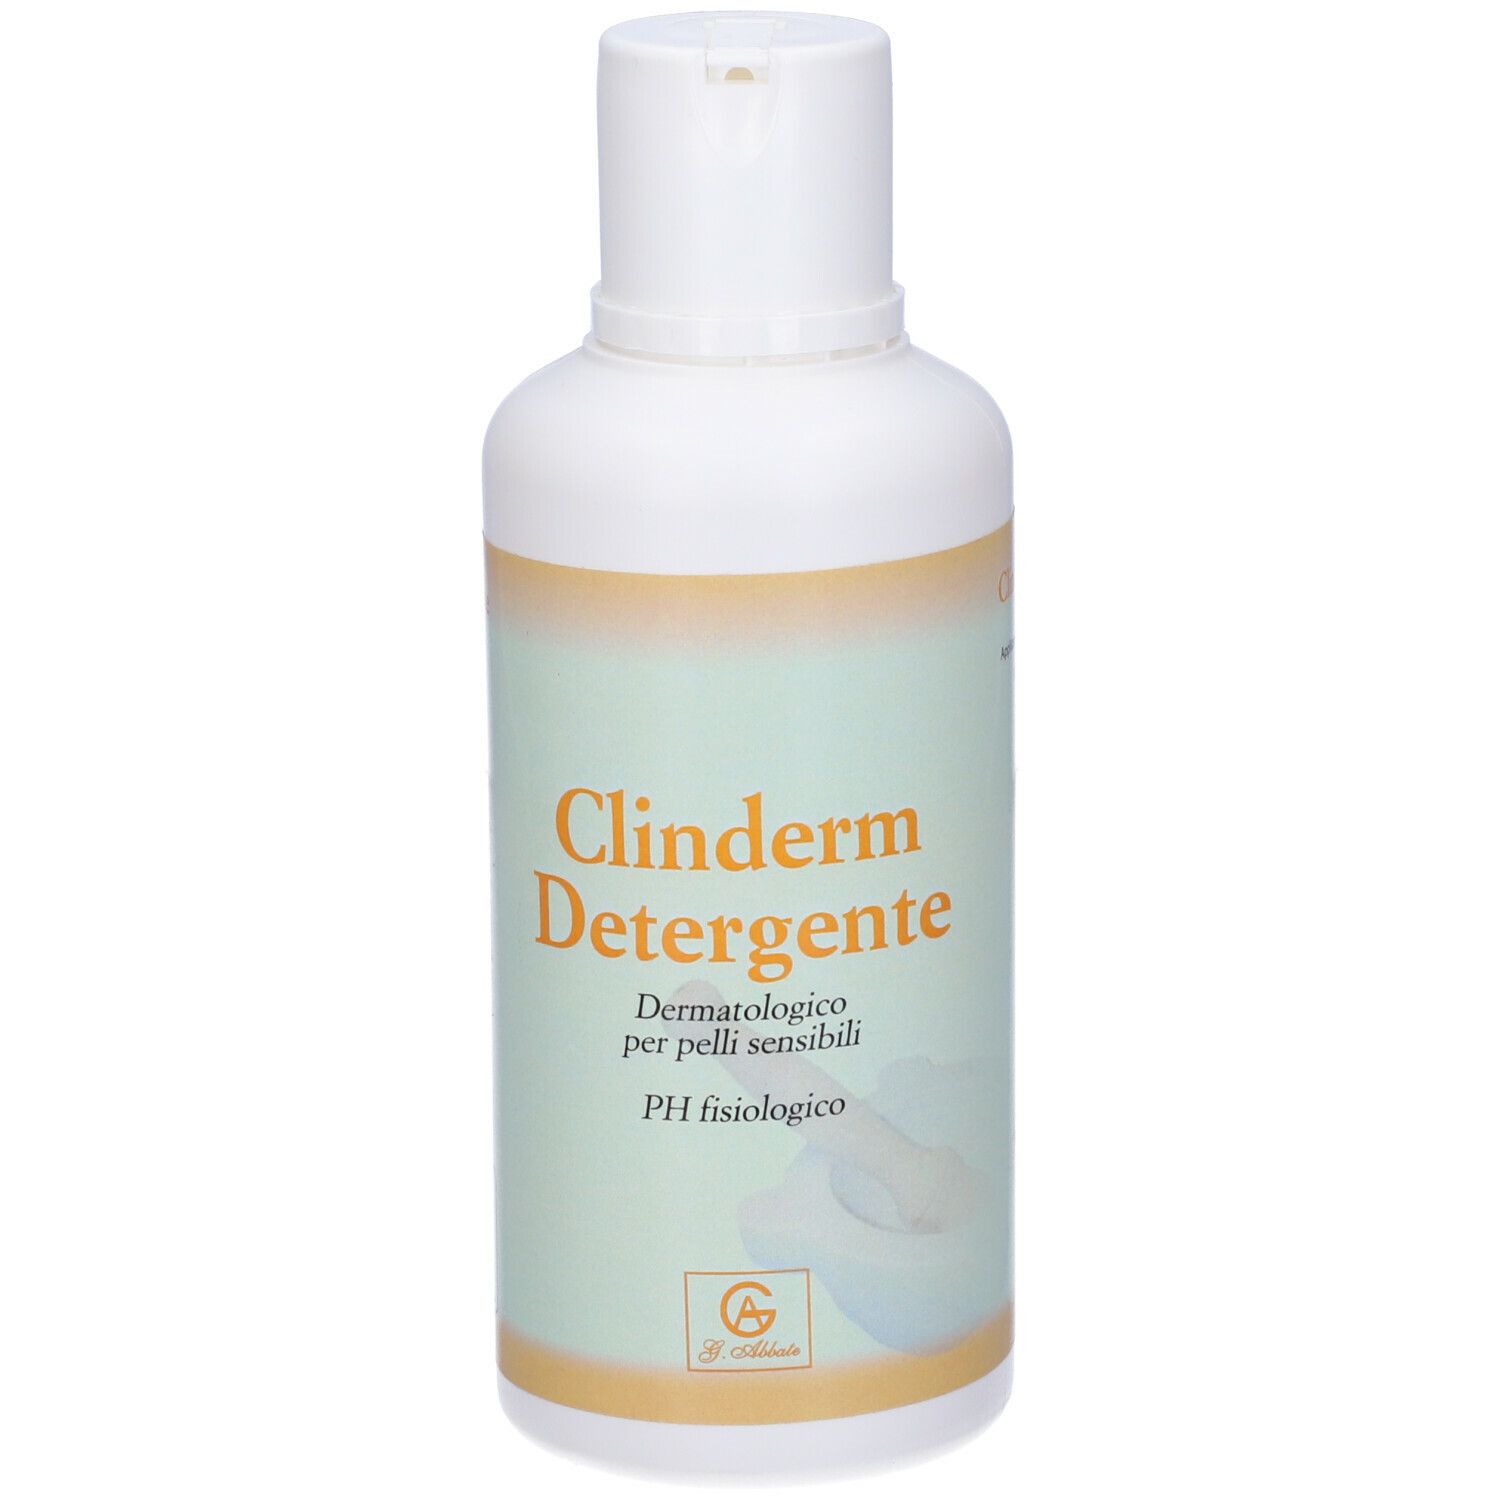 Image of Clinderm Detergente Dermatologico